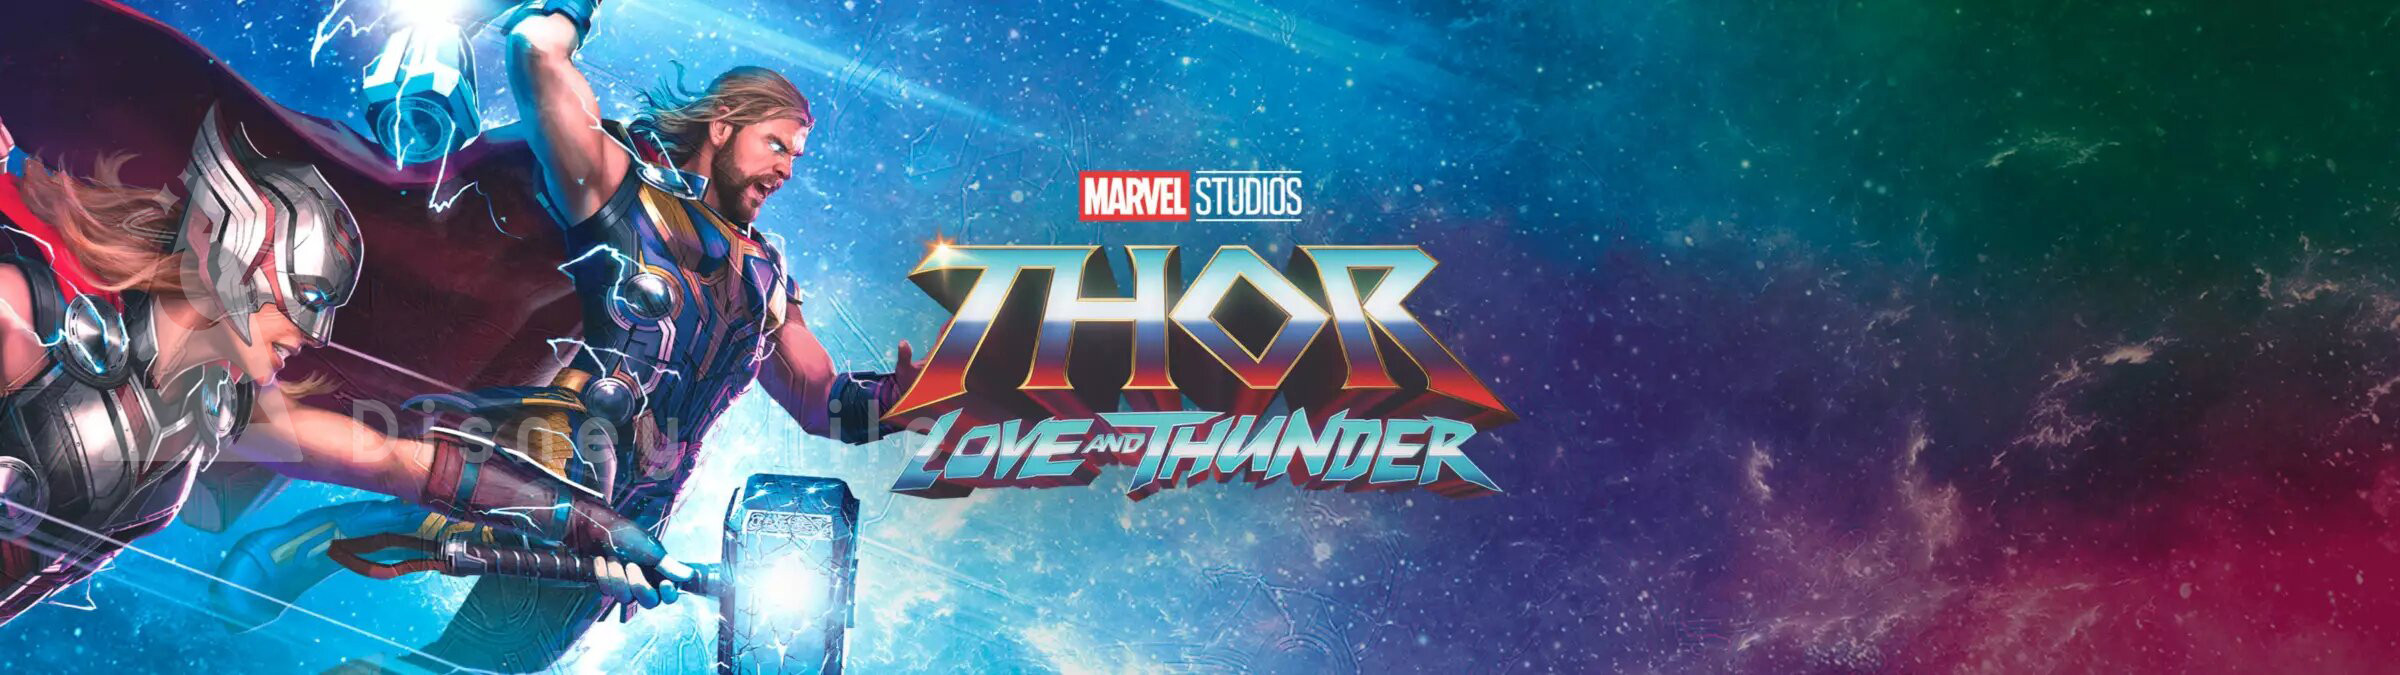 Thor: Love and Thunder' Art Shows Off Chris Hemsworth and Natalie Portman